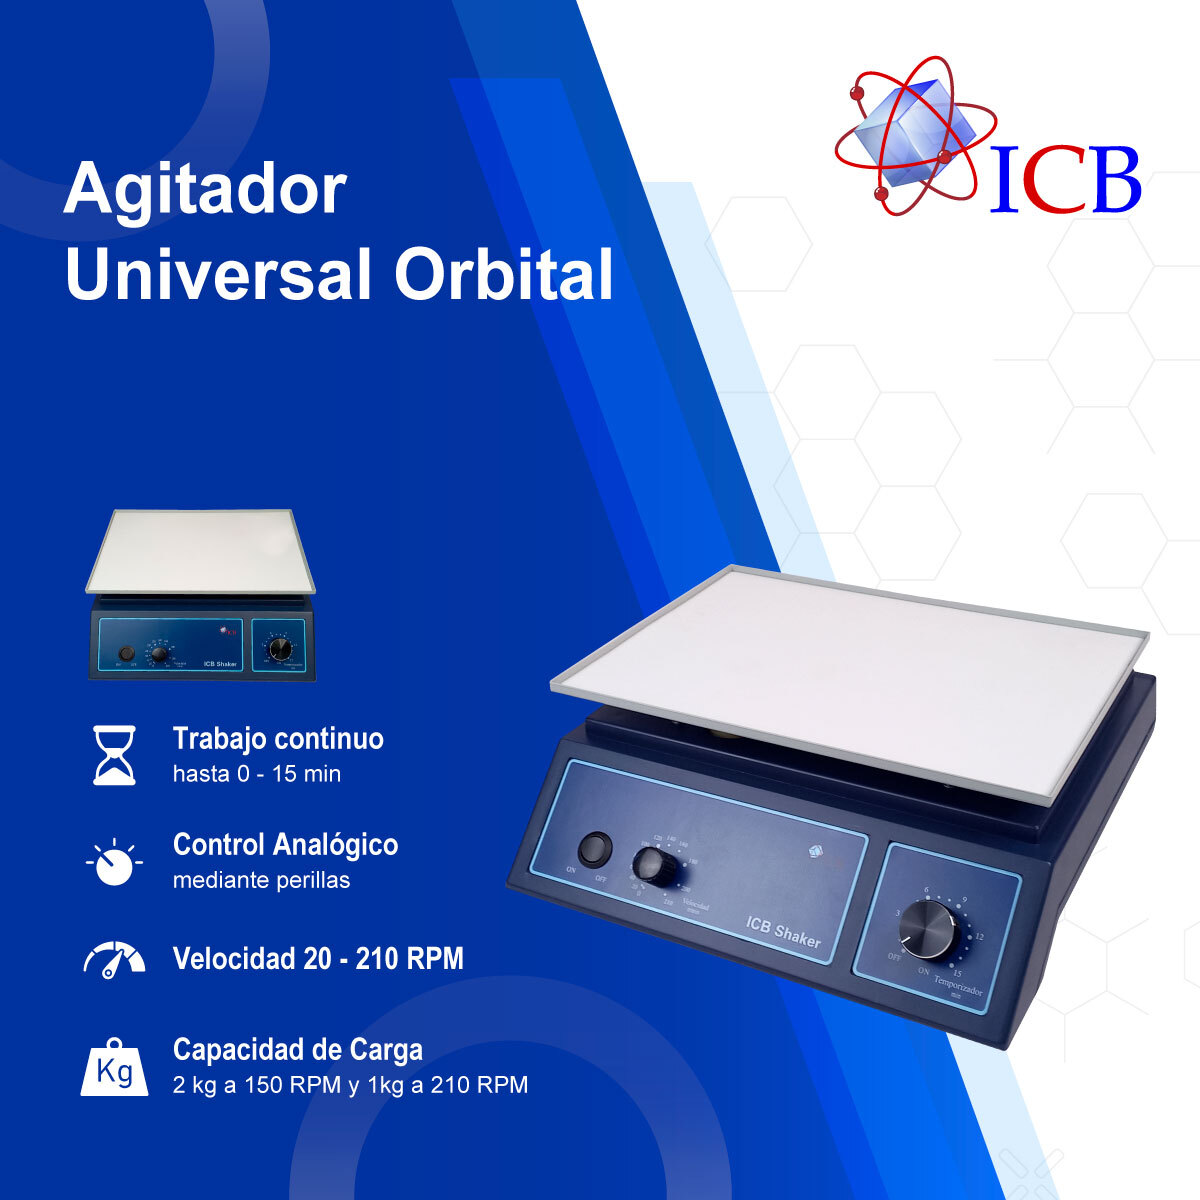 Agitador Universal Orbital